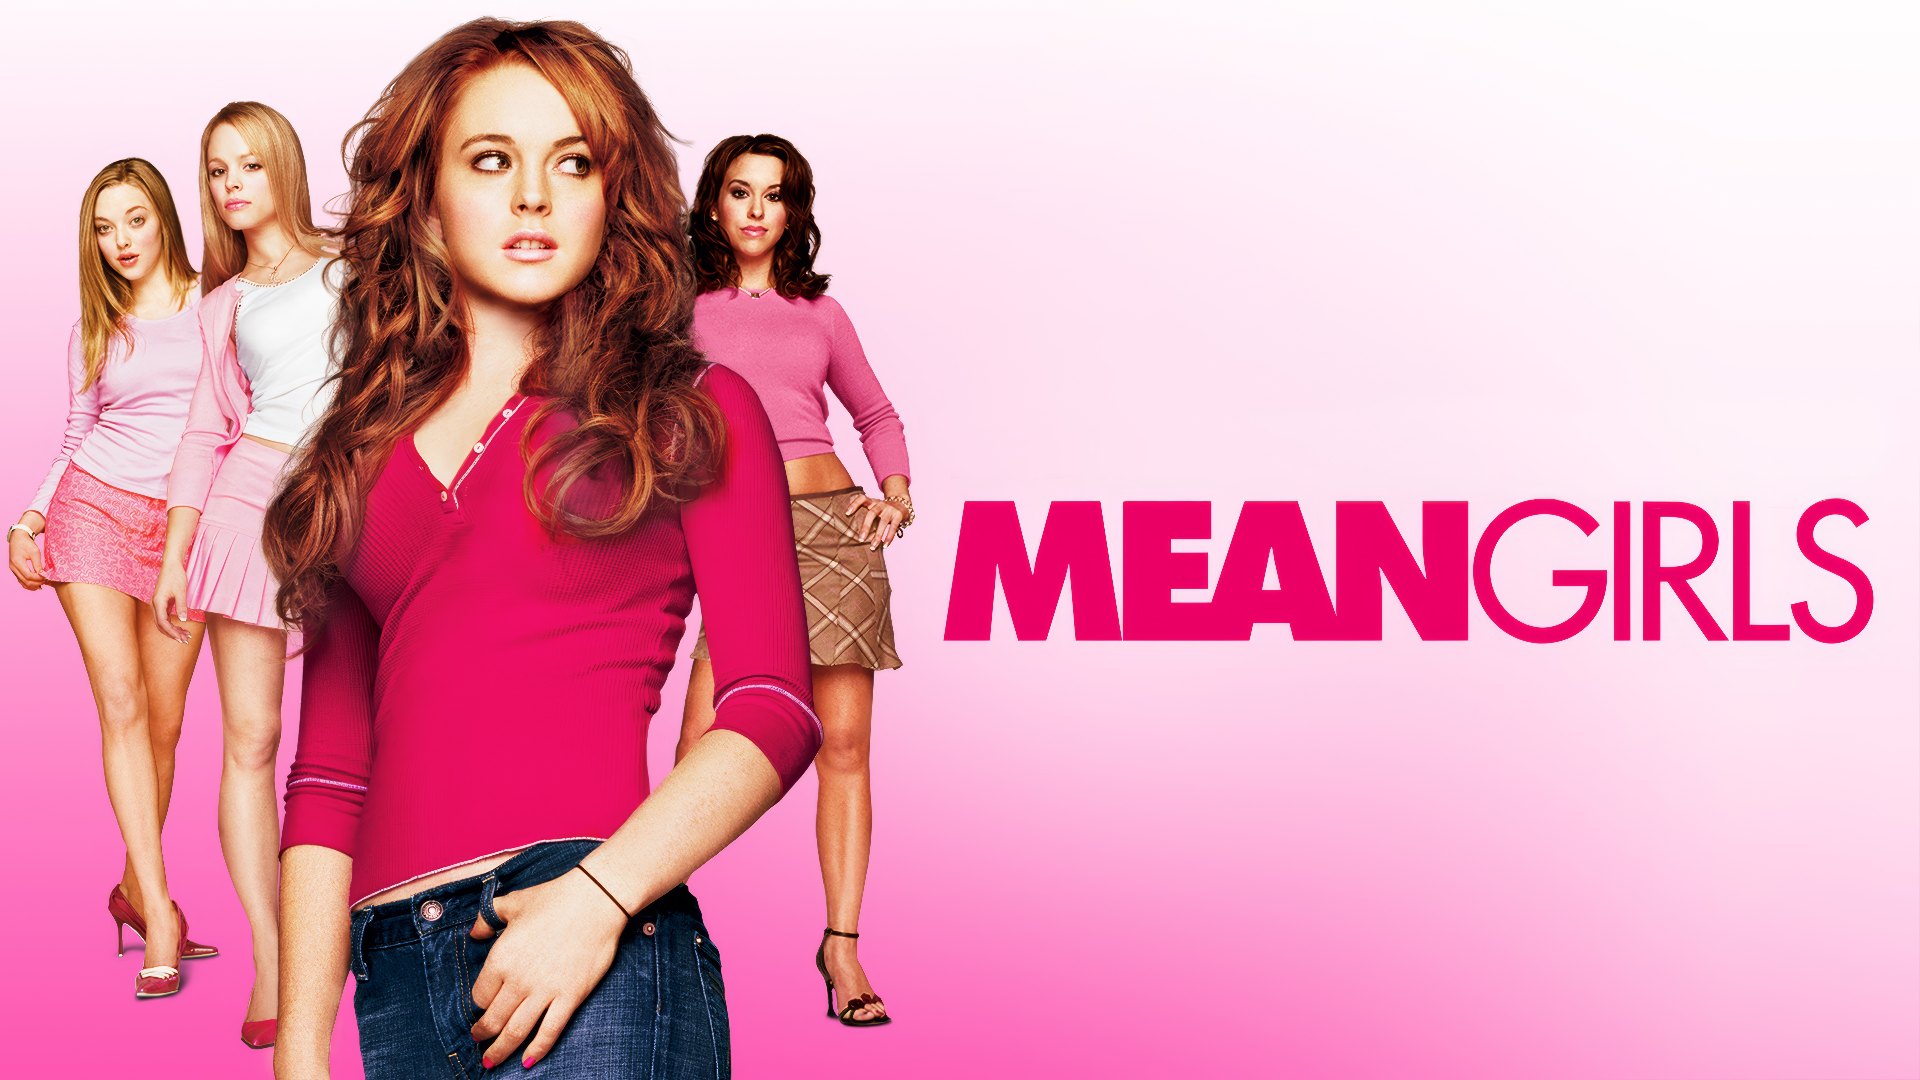 Mean Girls (2004) Google Drive Download